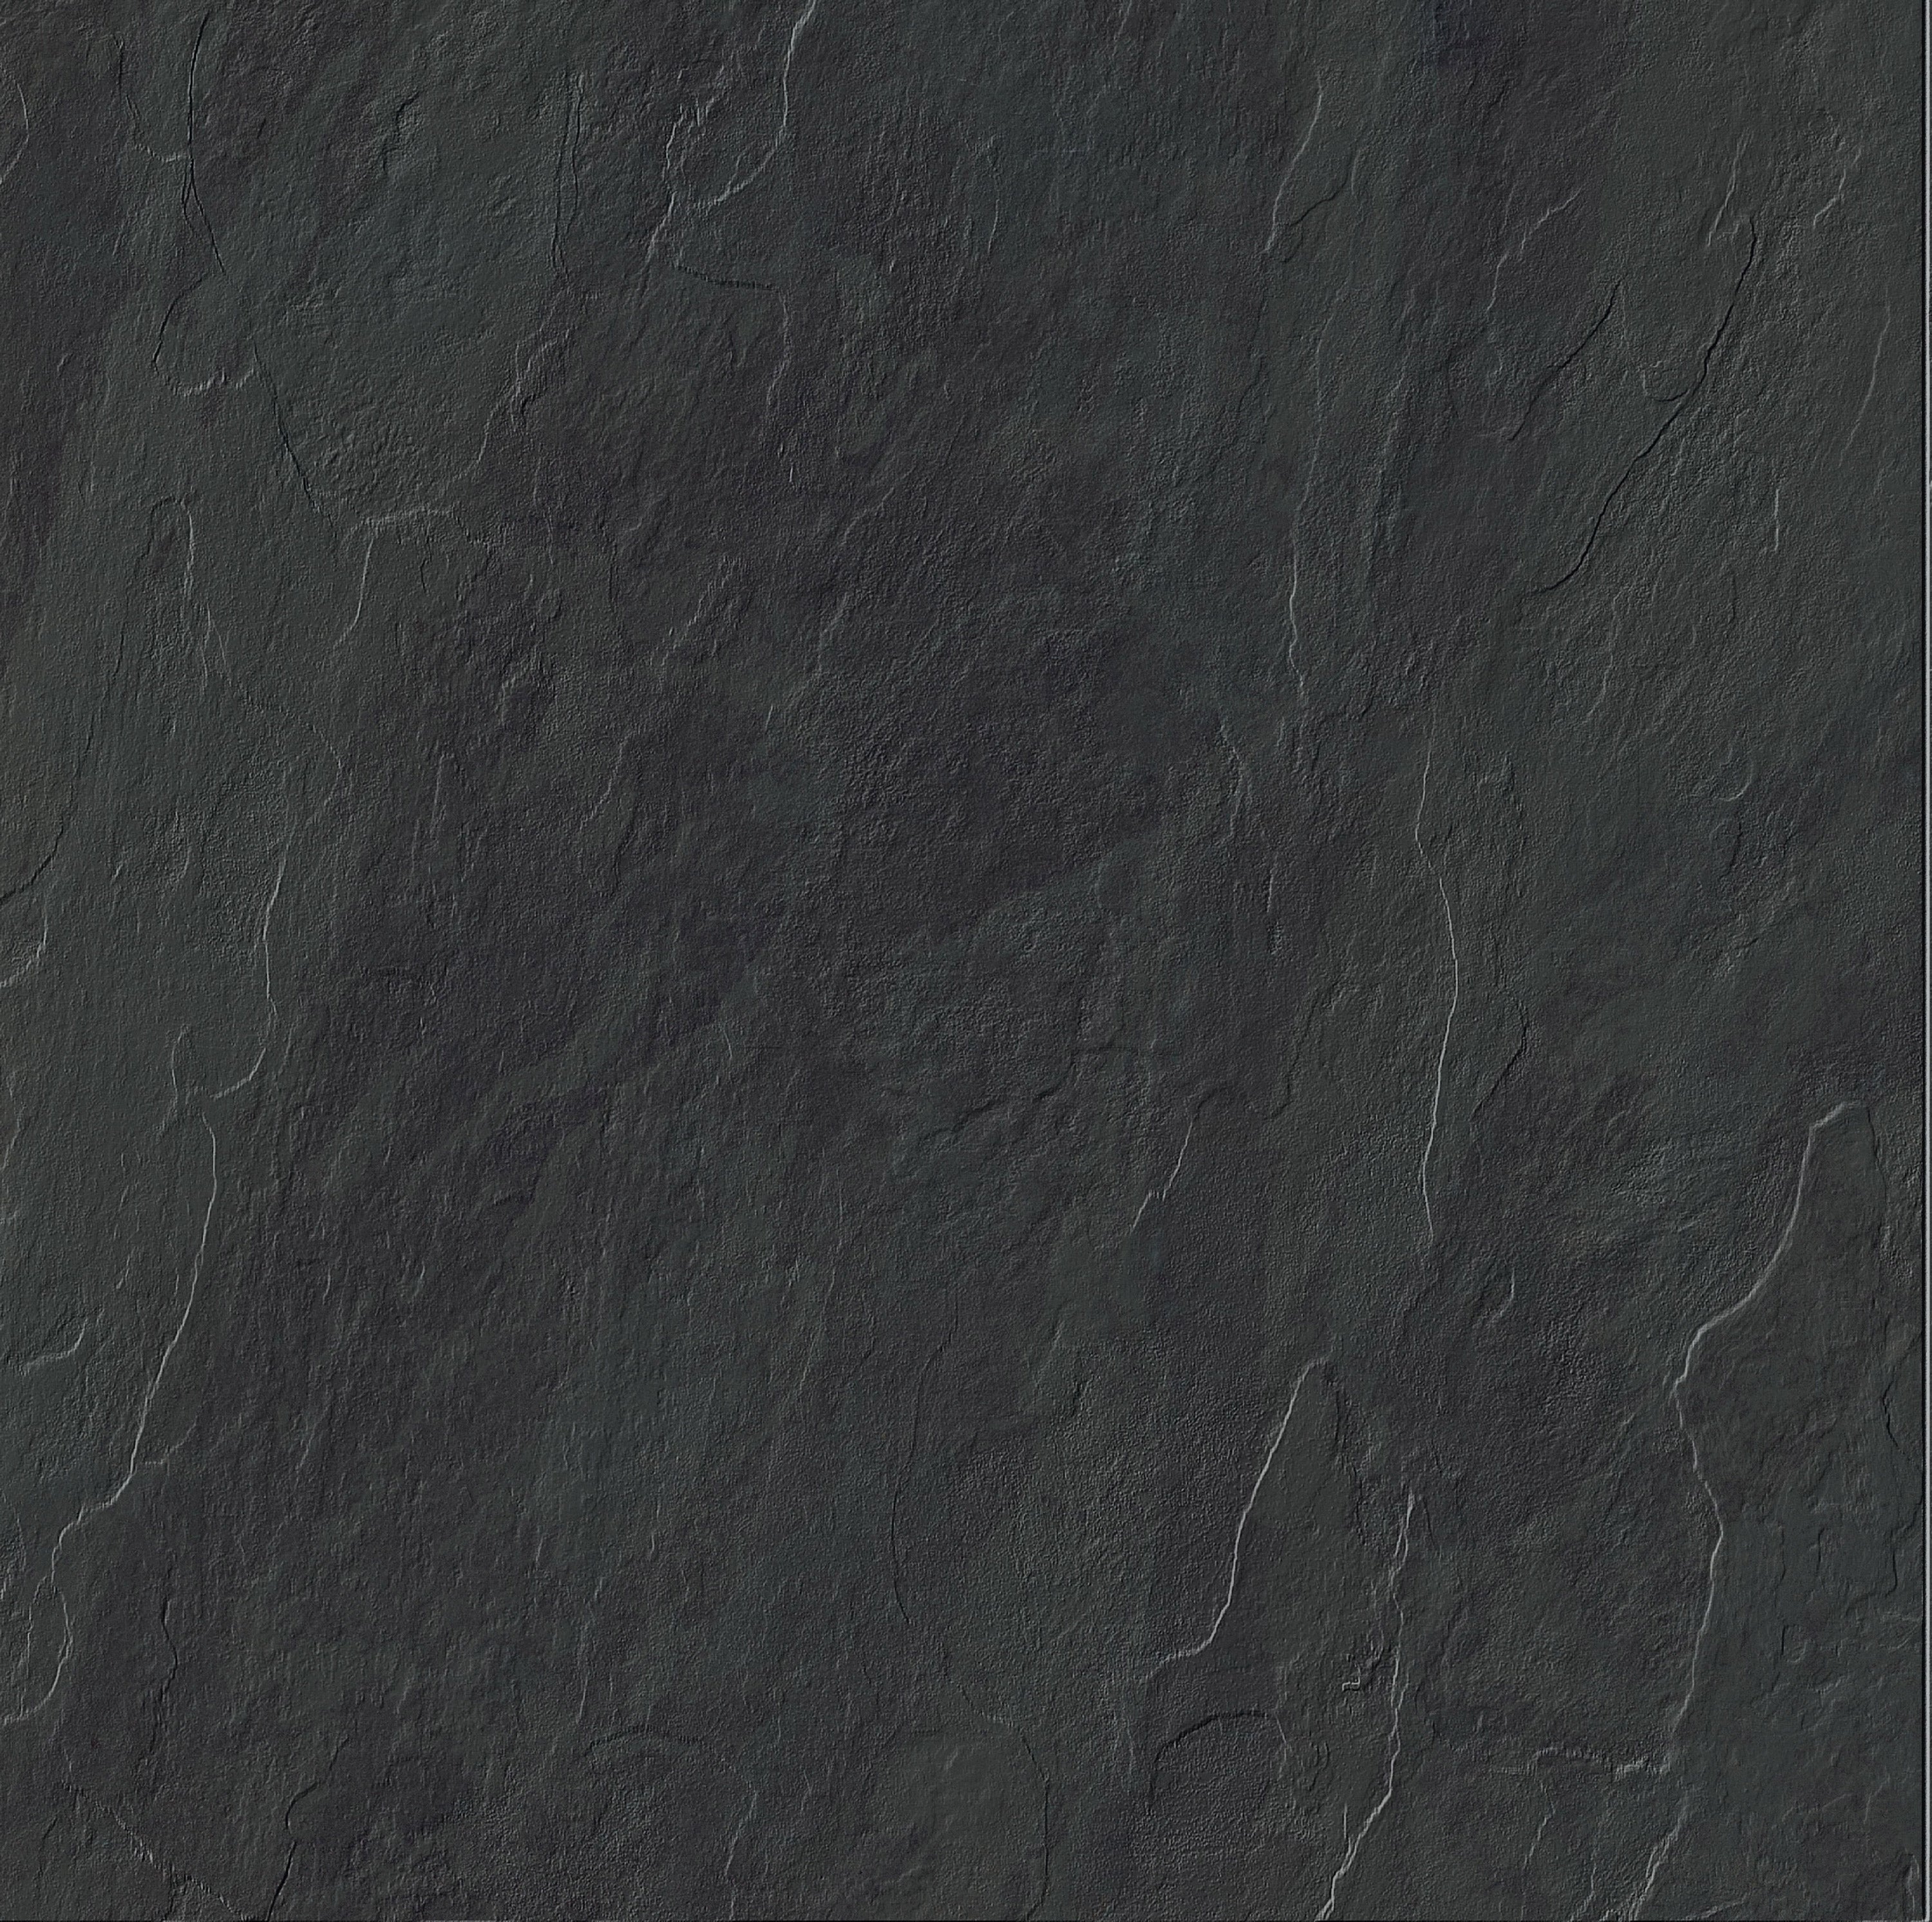 landmark frontier20 slate montauk black paver tile 24x24x20mm matte rectified porcelain tile distributed by surface group international